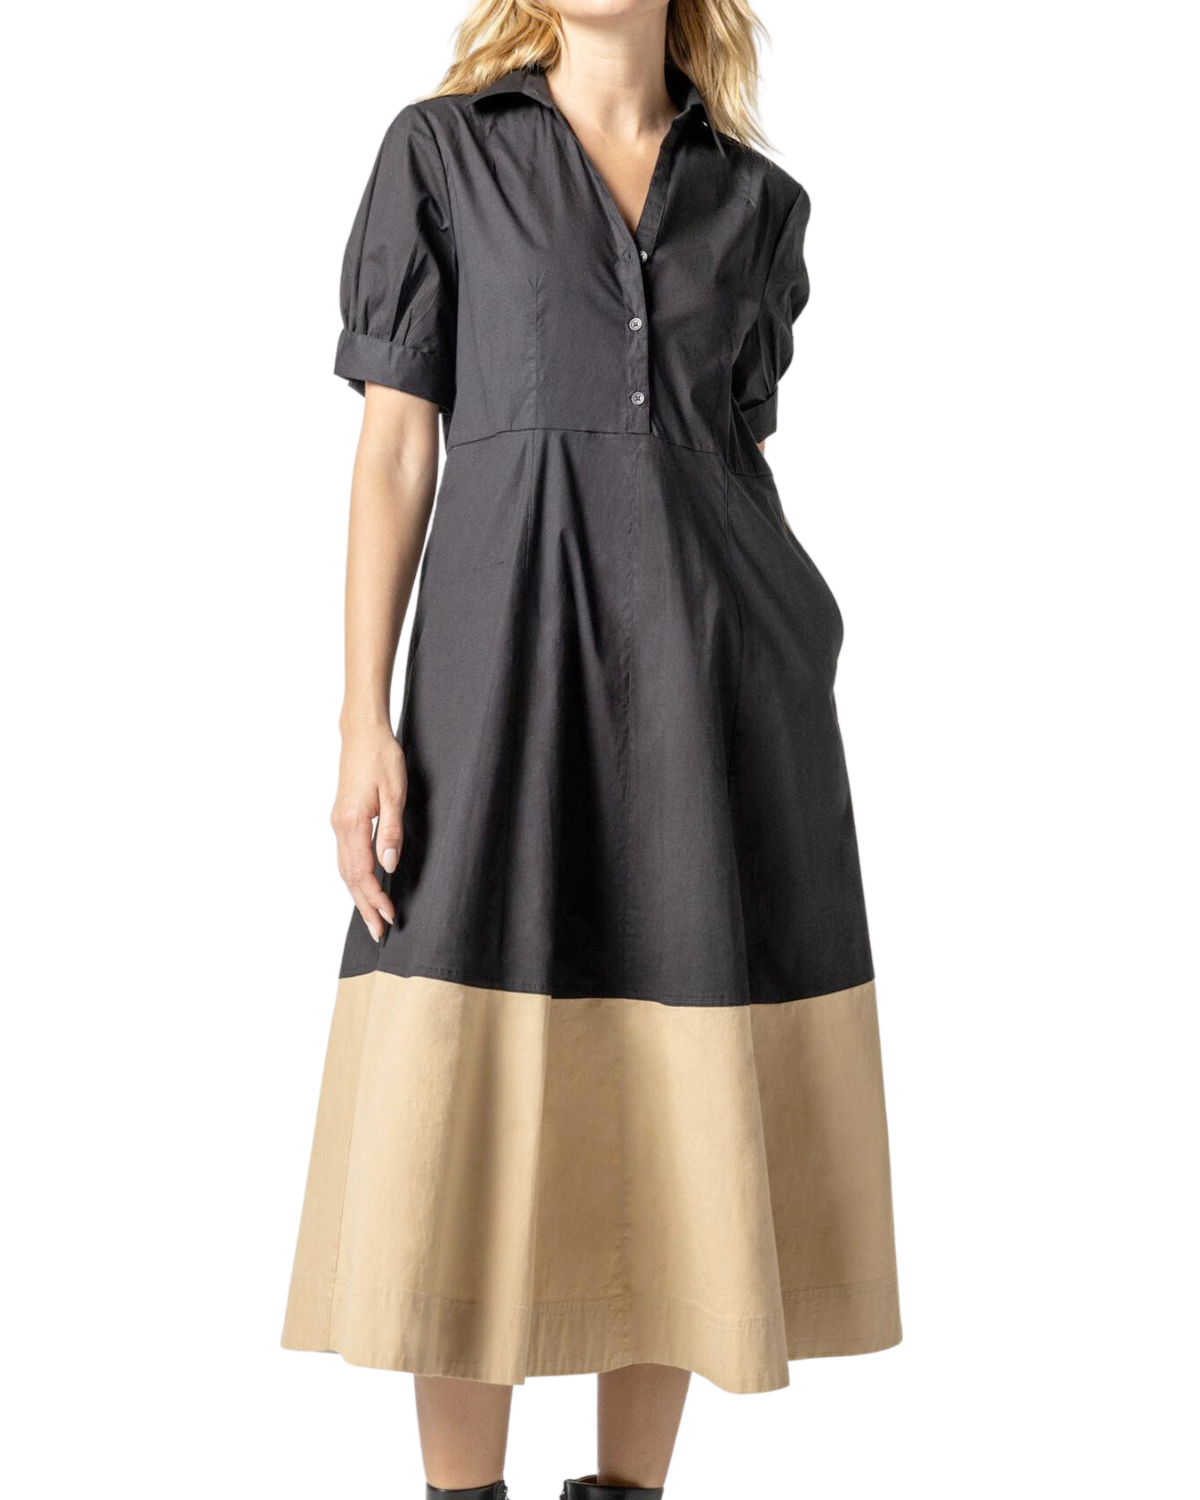 Collared Maxi Dress (Black/Khaki)